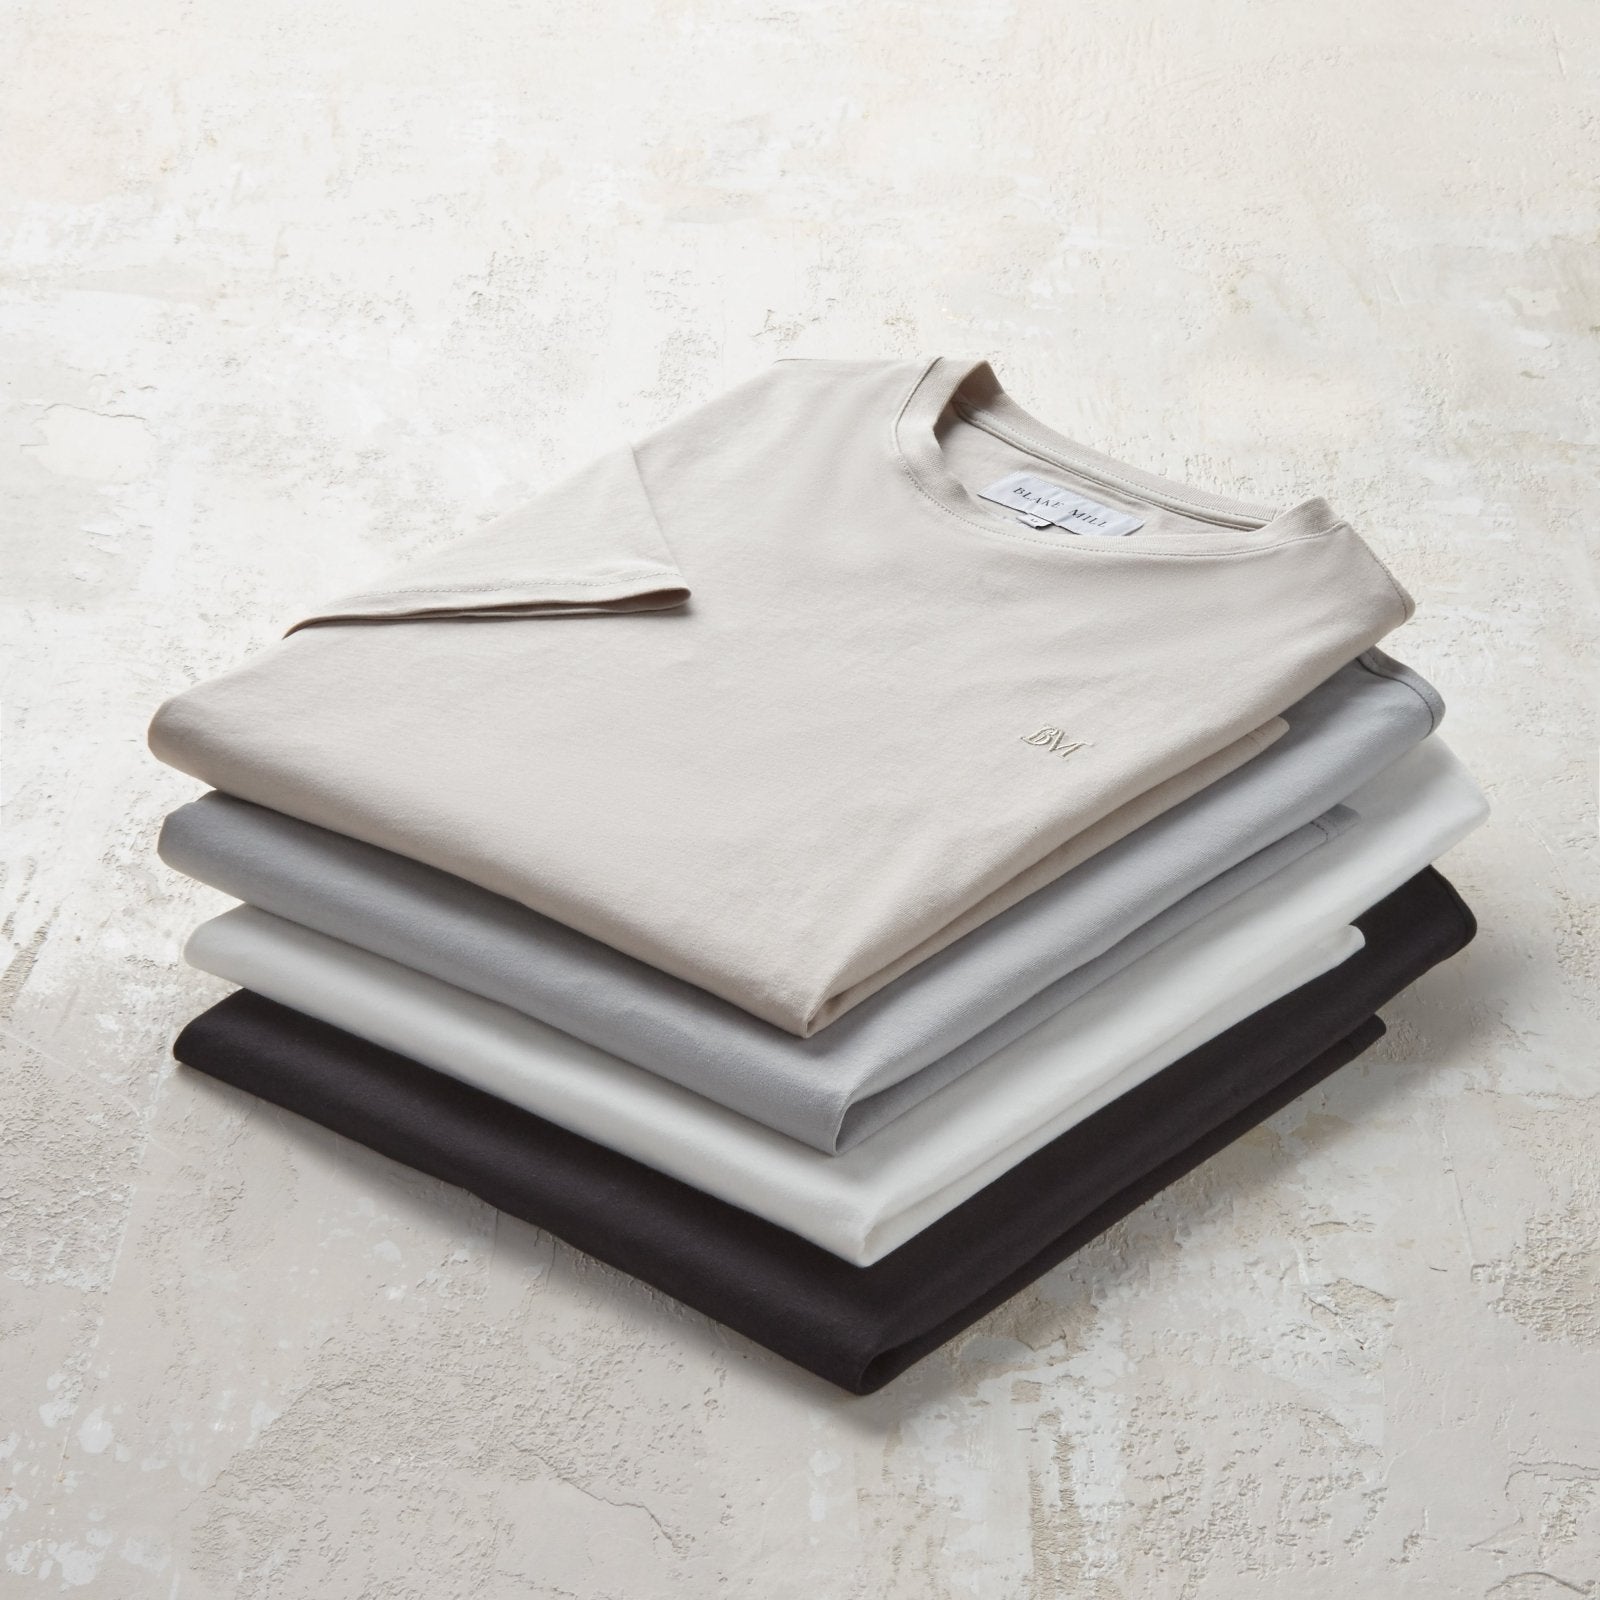 White Organic Cotton T - Shirt - Blake Mill